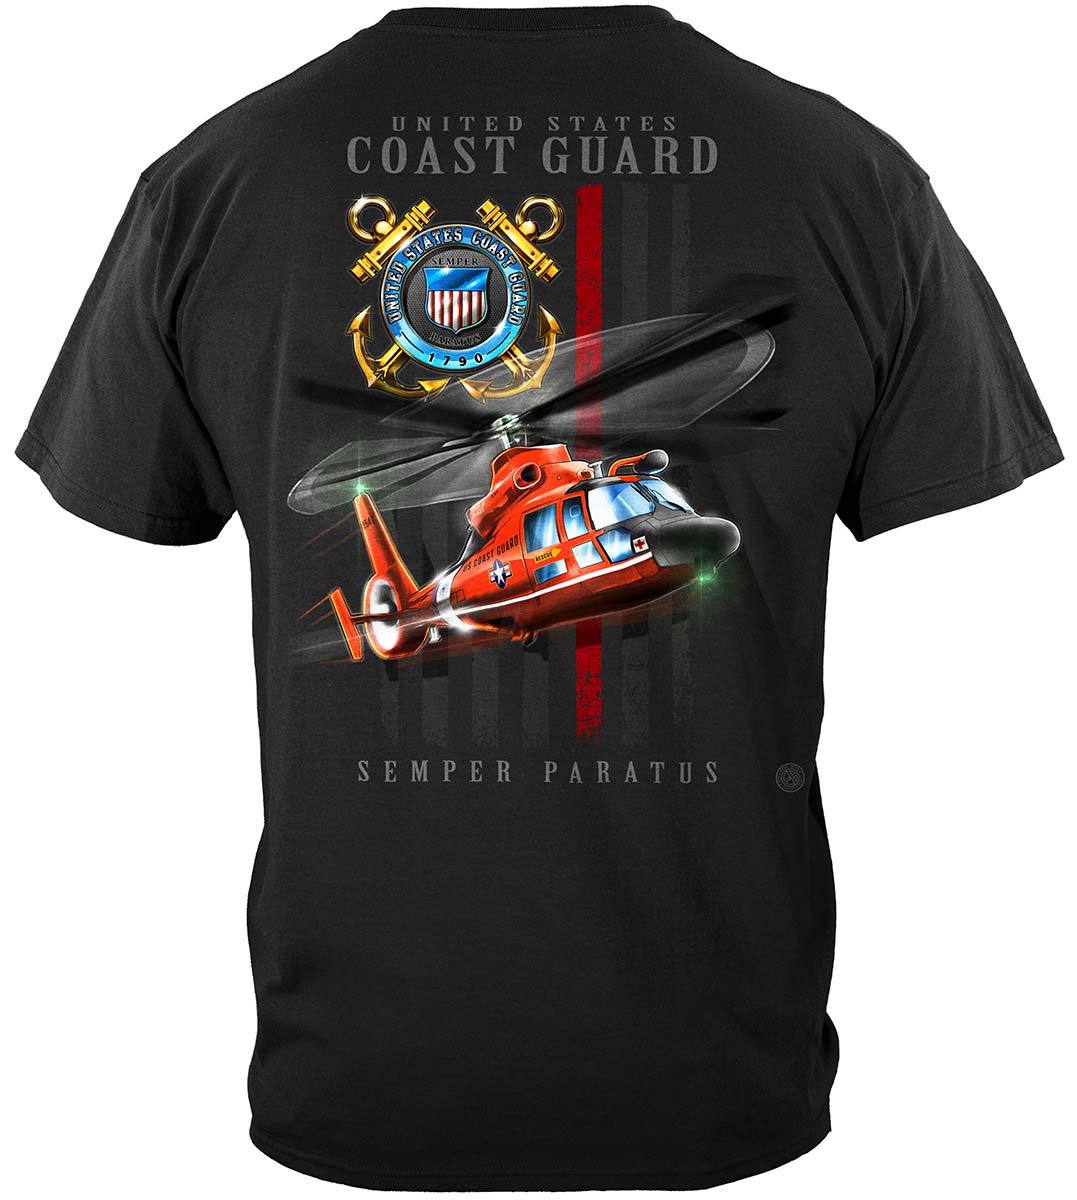 Coast Guard patriotic Flag Premium Long Sleeves